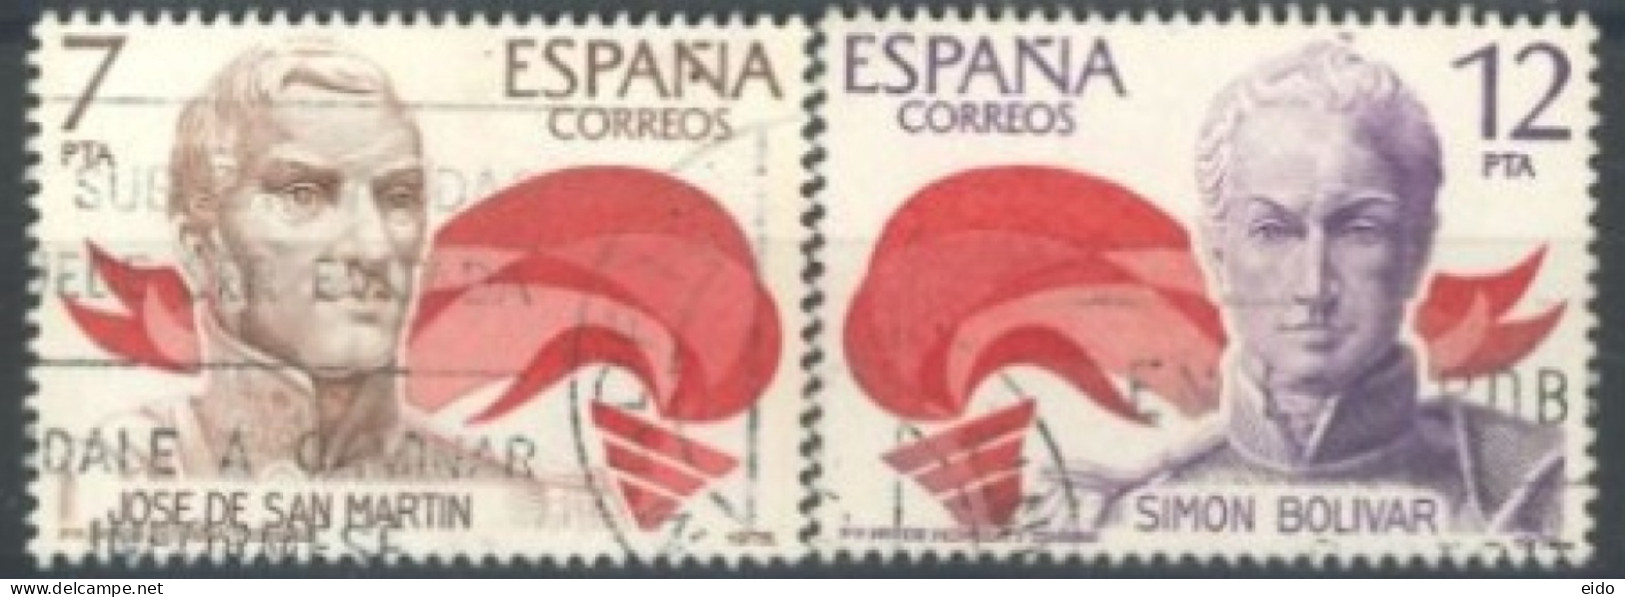 SPAIN, 1978, JOSE DE SAN MARTIN & SIMON BOLIVAR STAMPS COMPLETE SET OF 2, # 2116/17, USED. - Usados